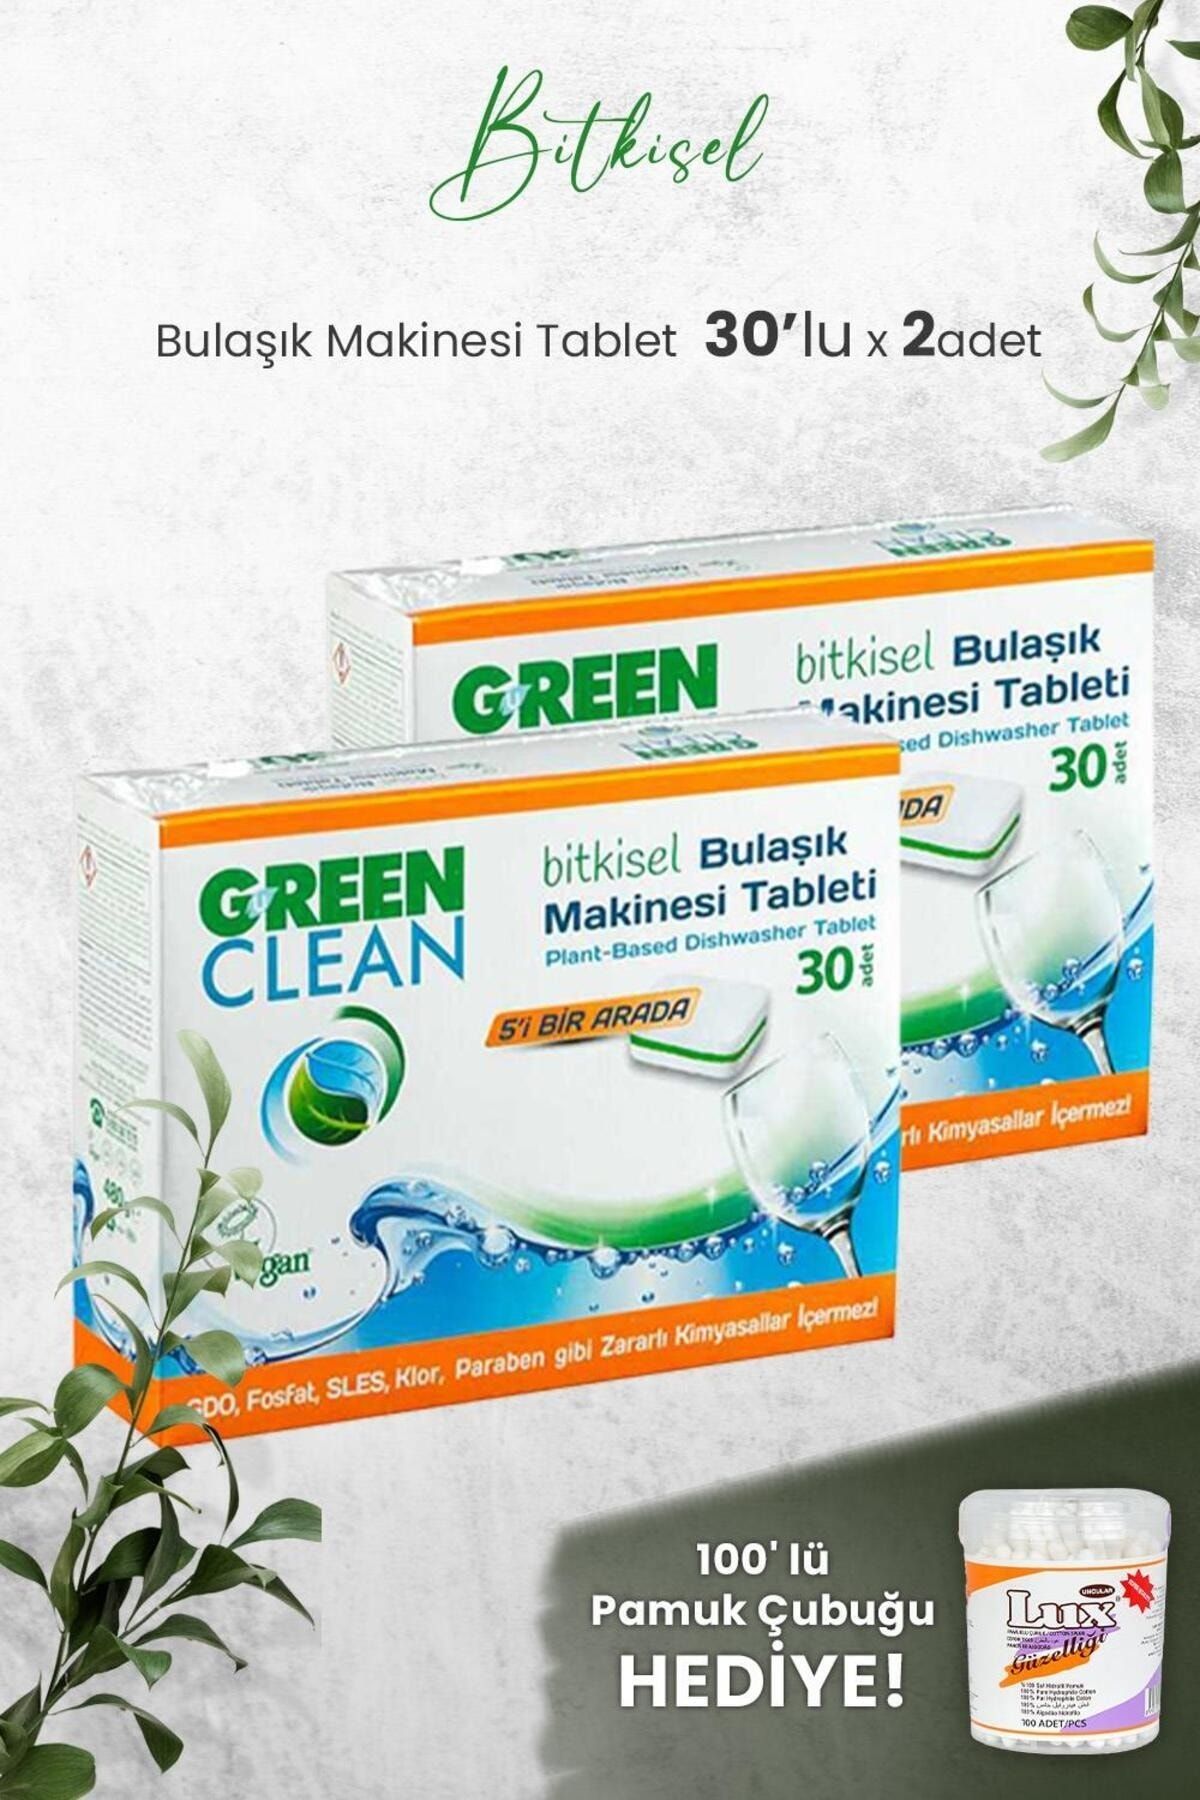 Green Clean U Green Clean Bulaşık Makinesi Tablet 30'lu x 2 Adet ve Hediyeli